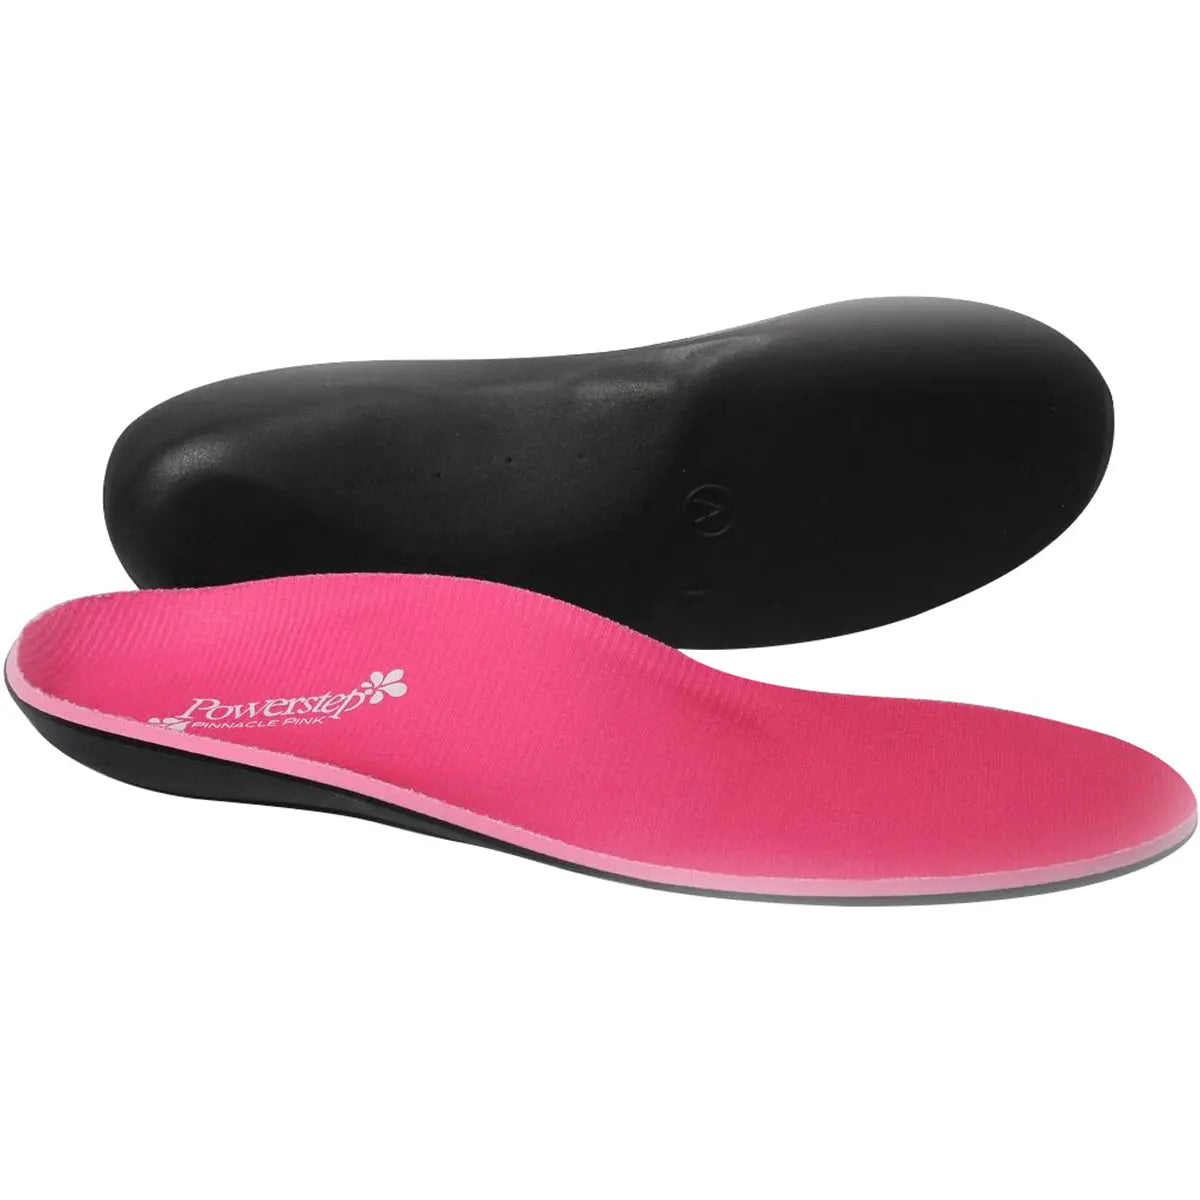 Powerstep Pinnacle Pink Full Length Orthotic Shoe Insoles Powerstep